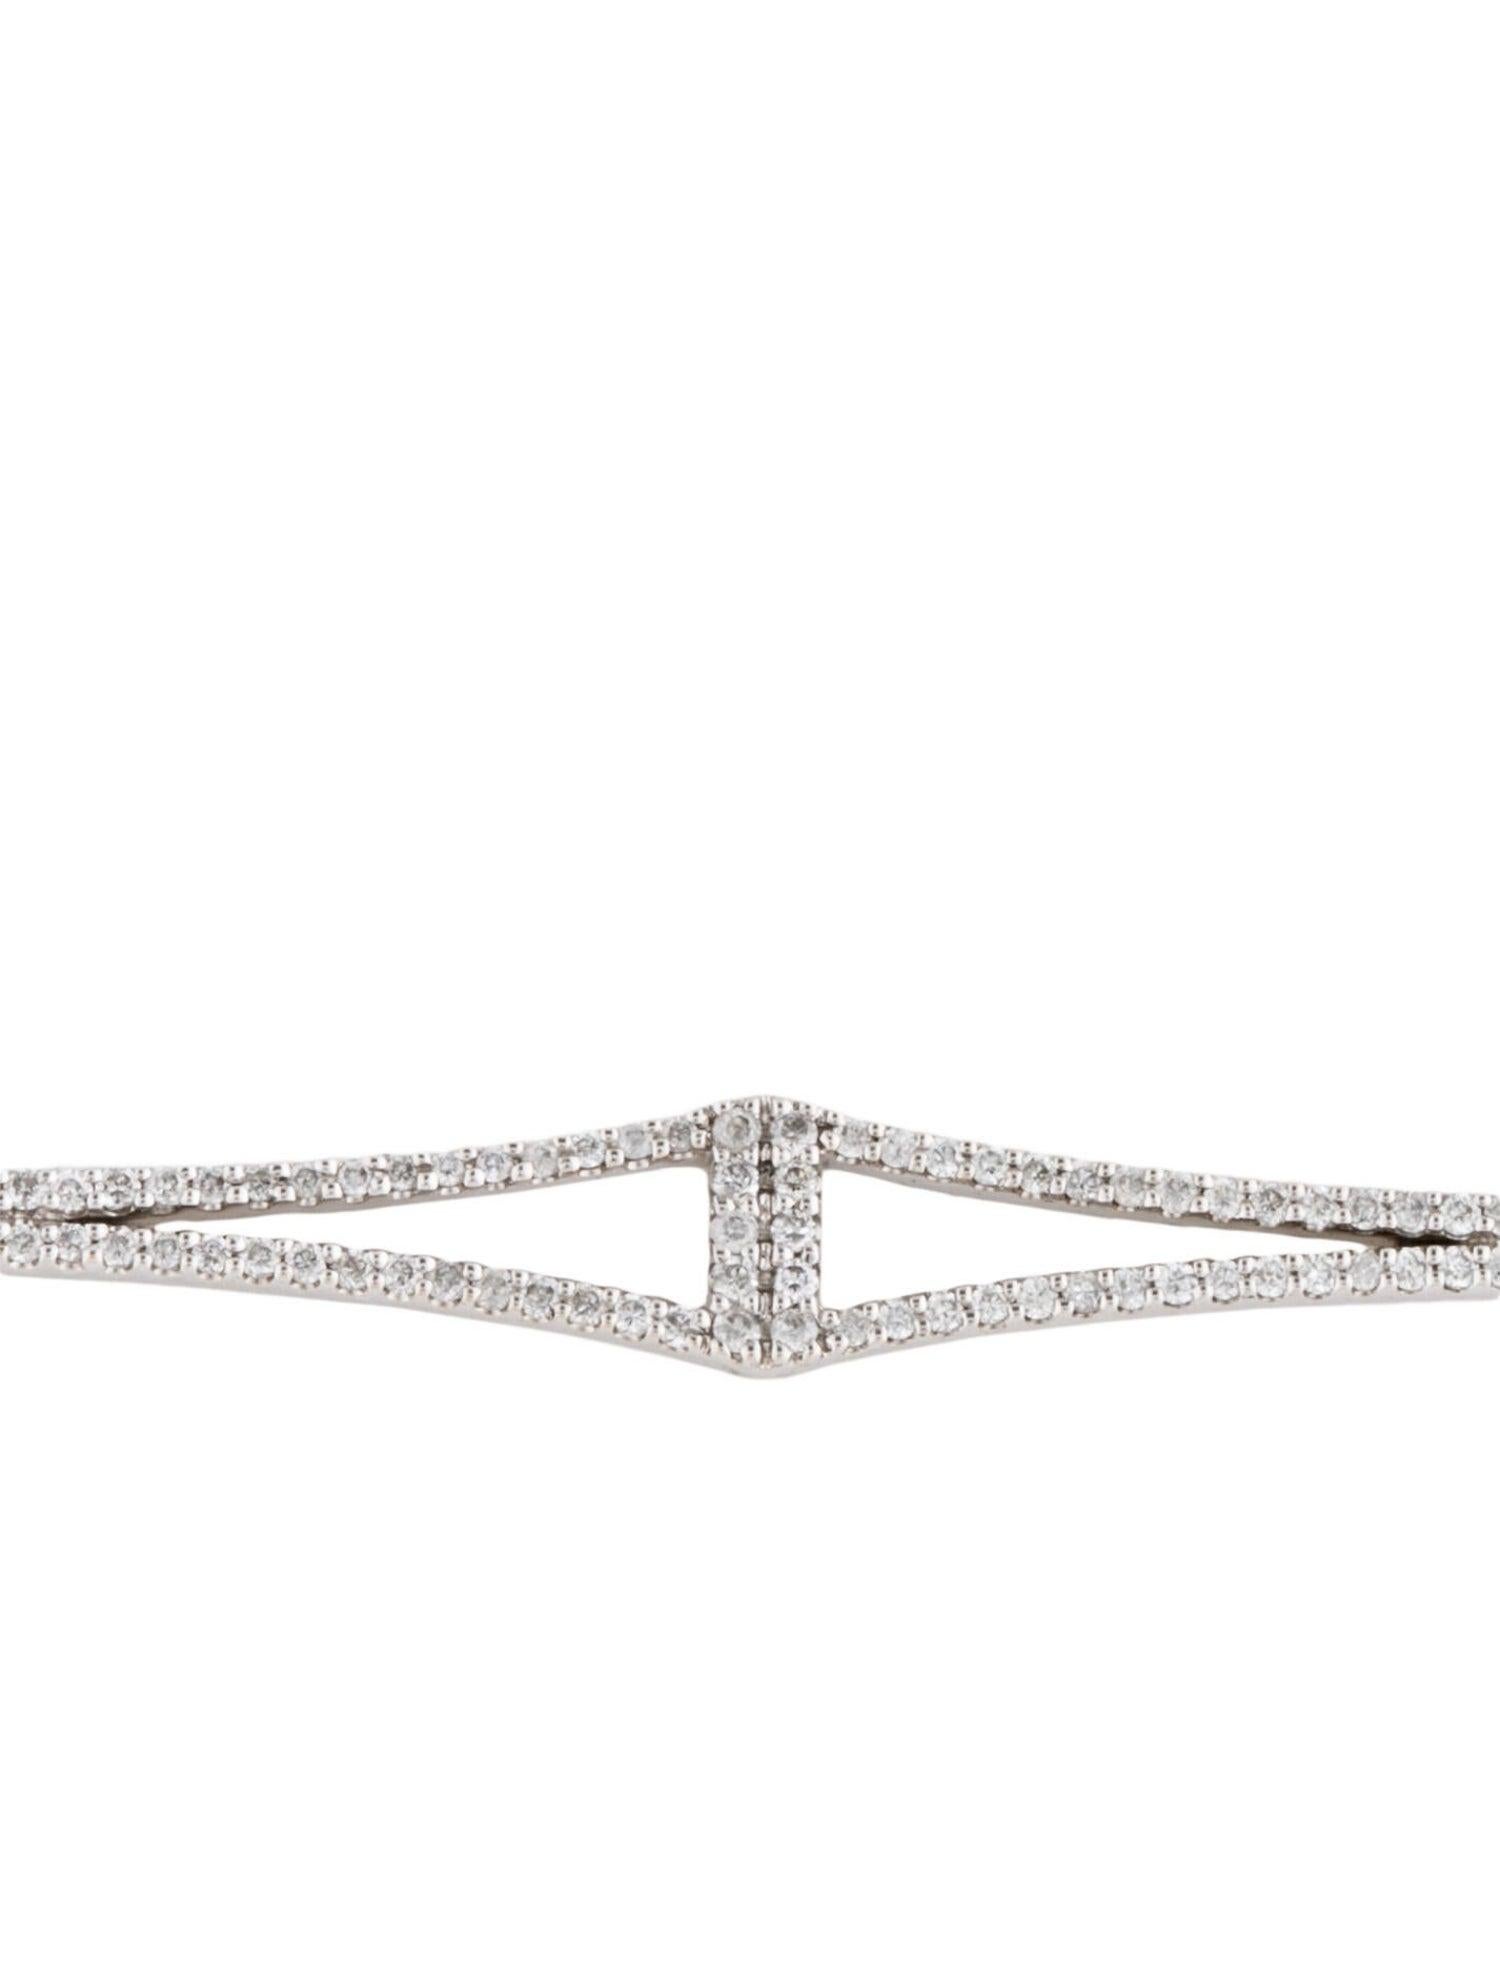 Round Cut Elegant 14K White Gold Diamond Link Bracelet - 0.37ct Round Brilliant Cut For Sale